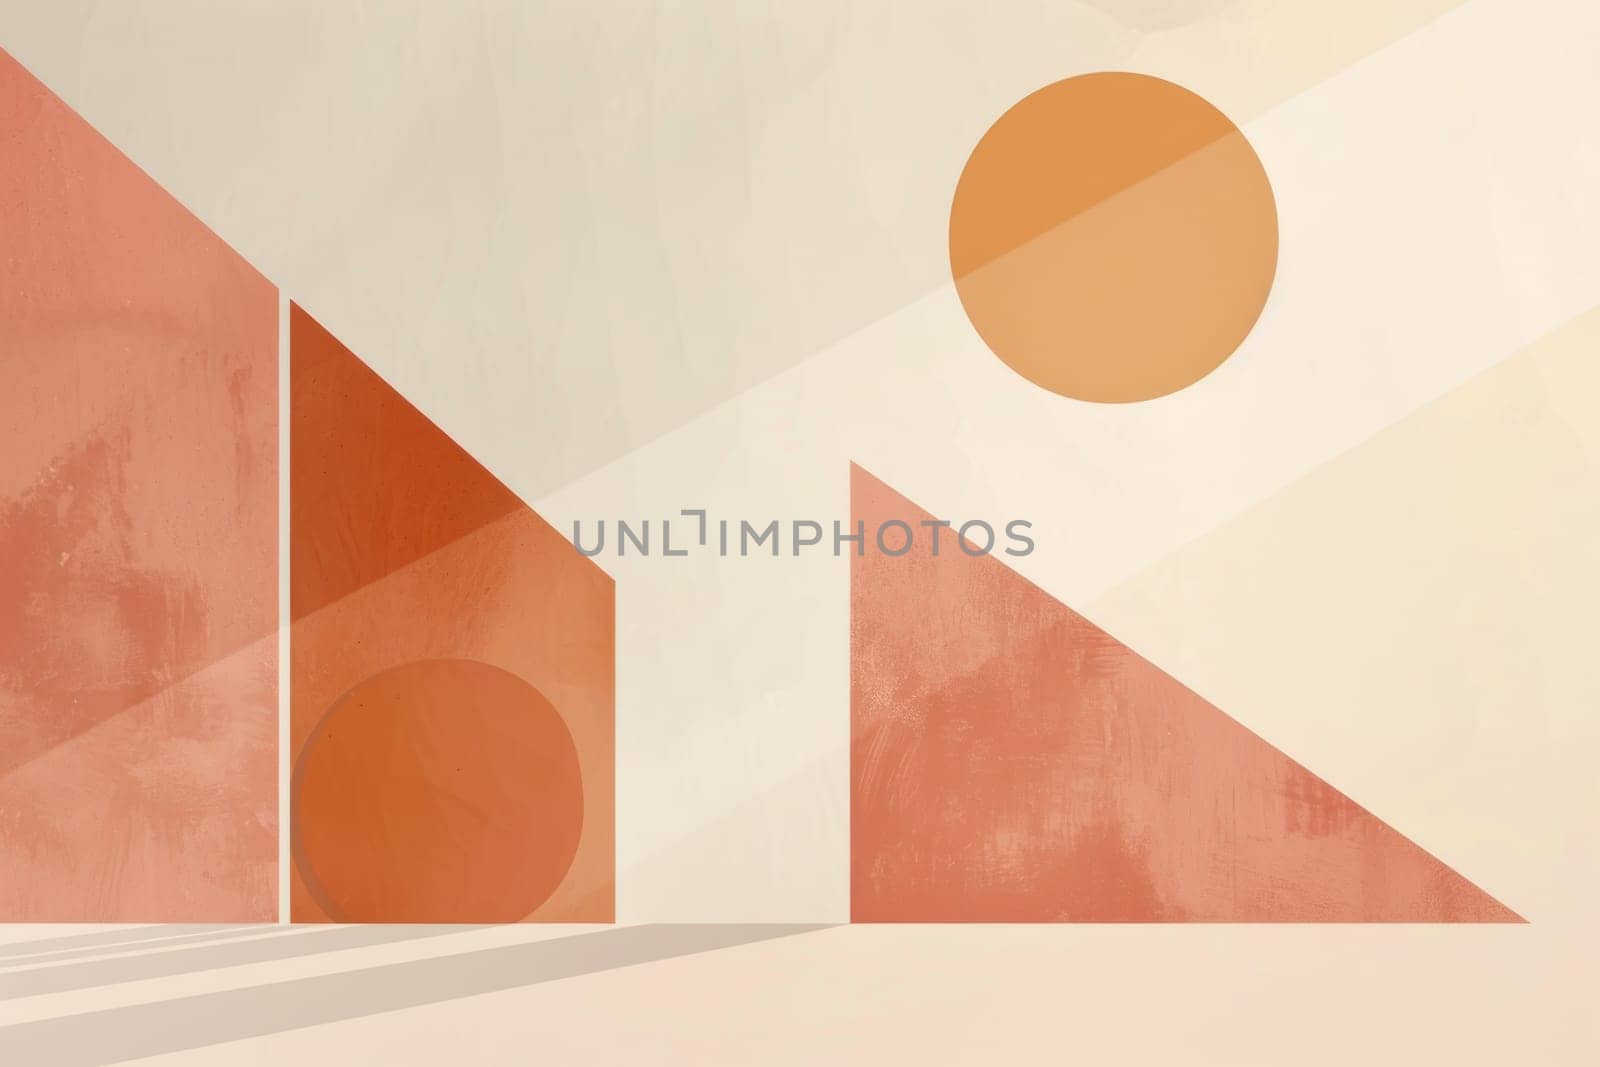 A minimalist geometric design earth tone color by golfmerrymaker